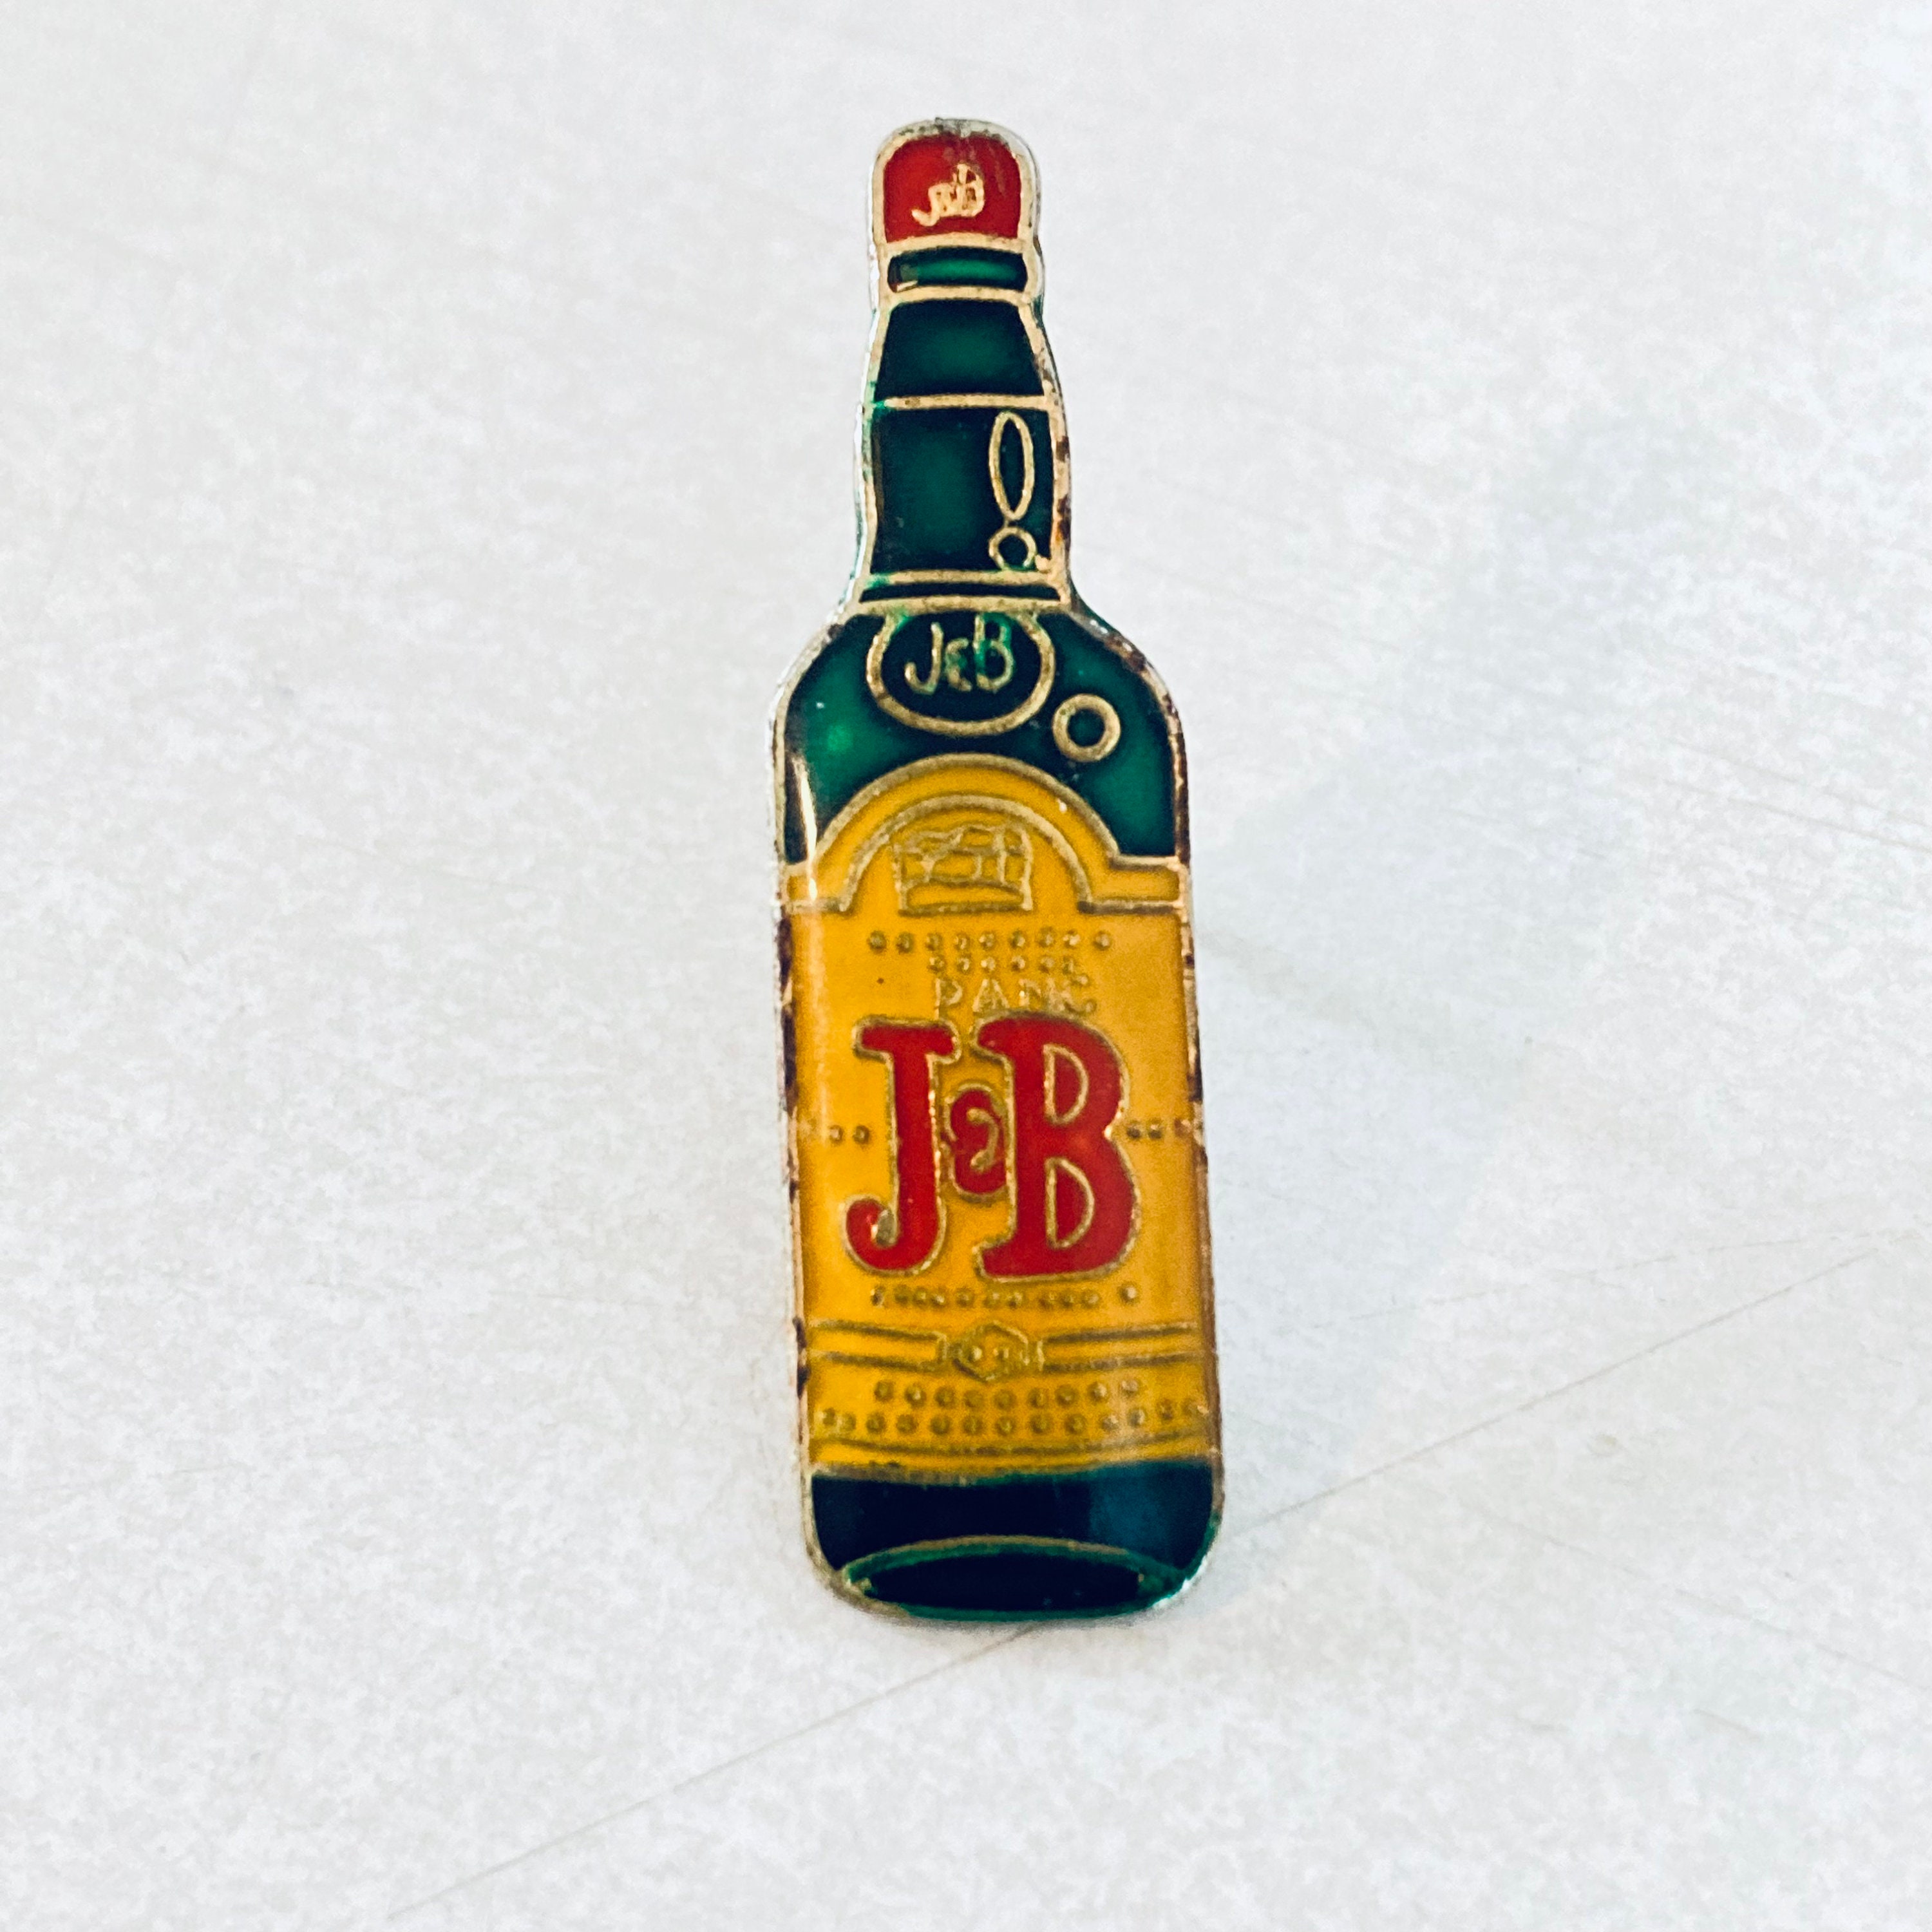 Jb Bottle picture